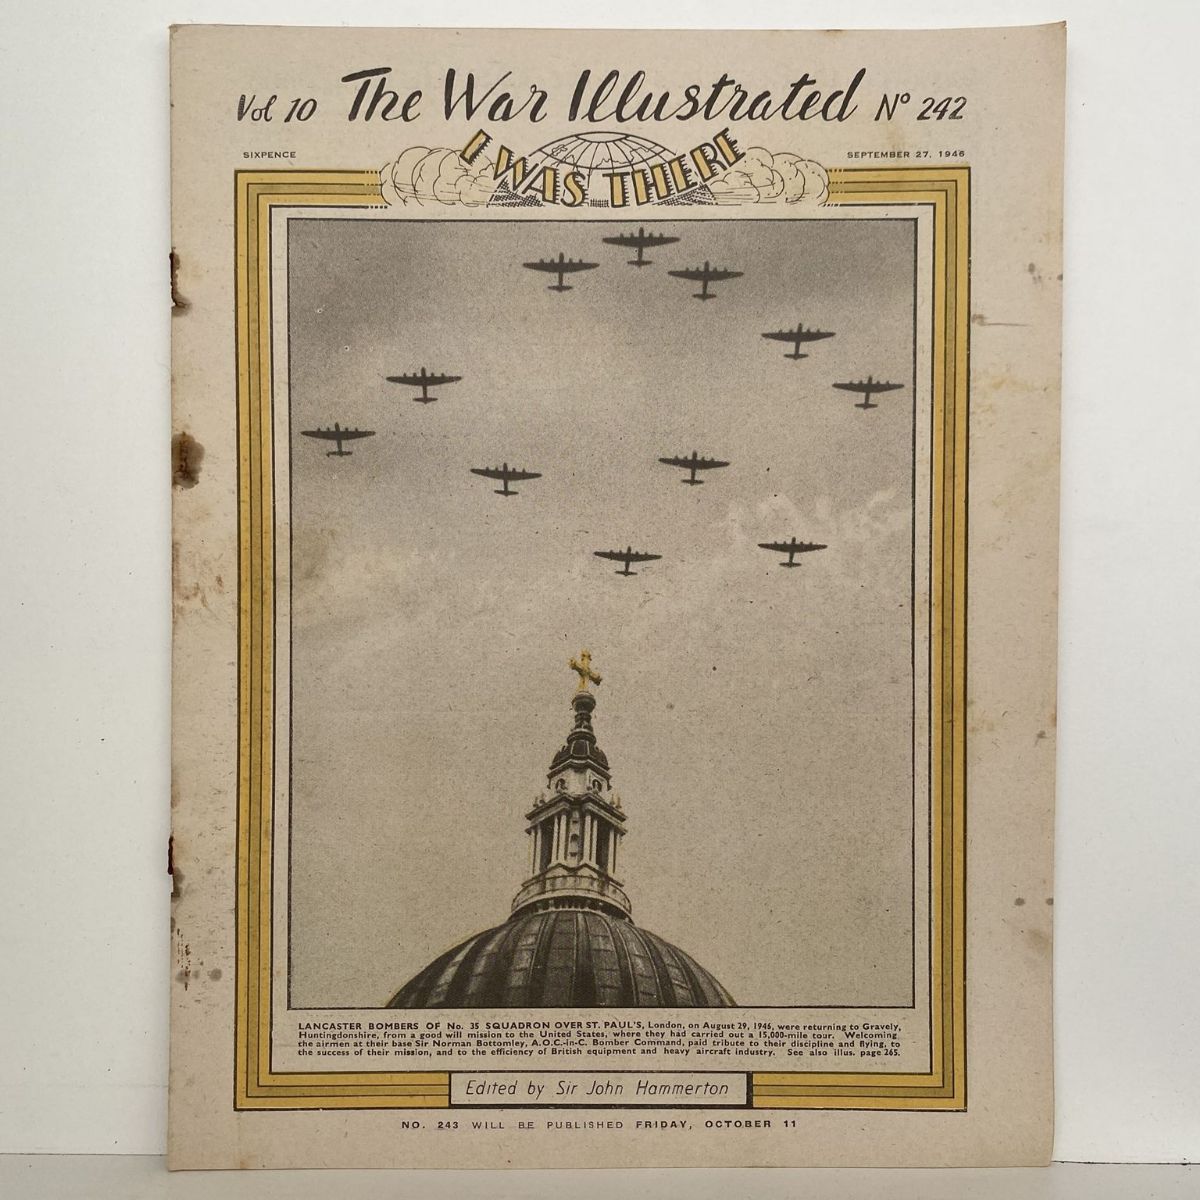 THE WAR ILLUSTRATED - Vol 10, No 242, 27th Sep 1946